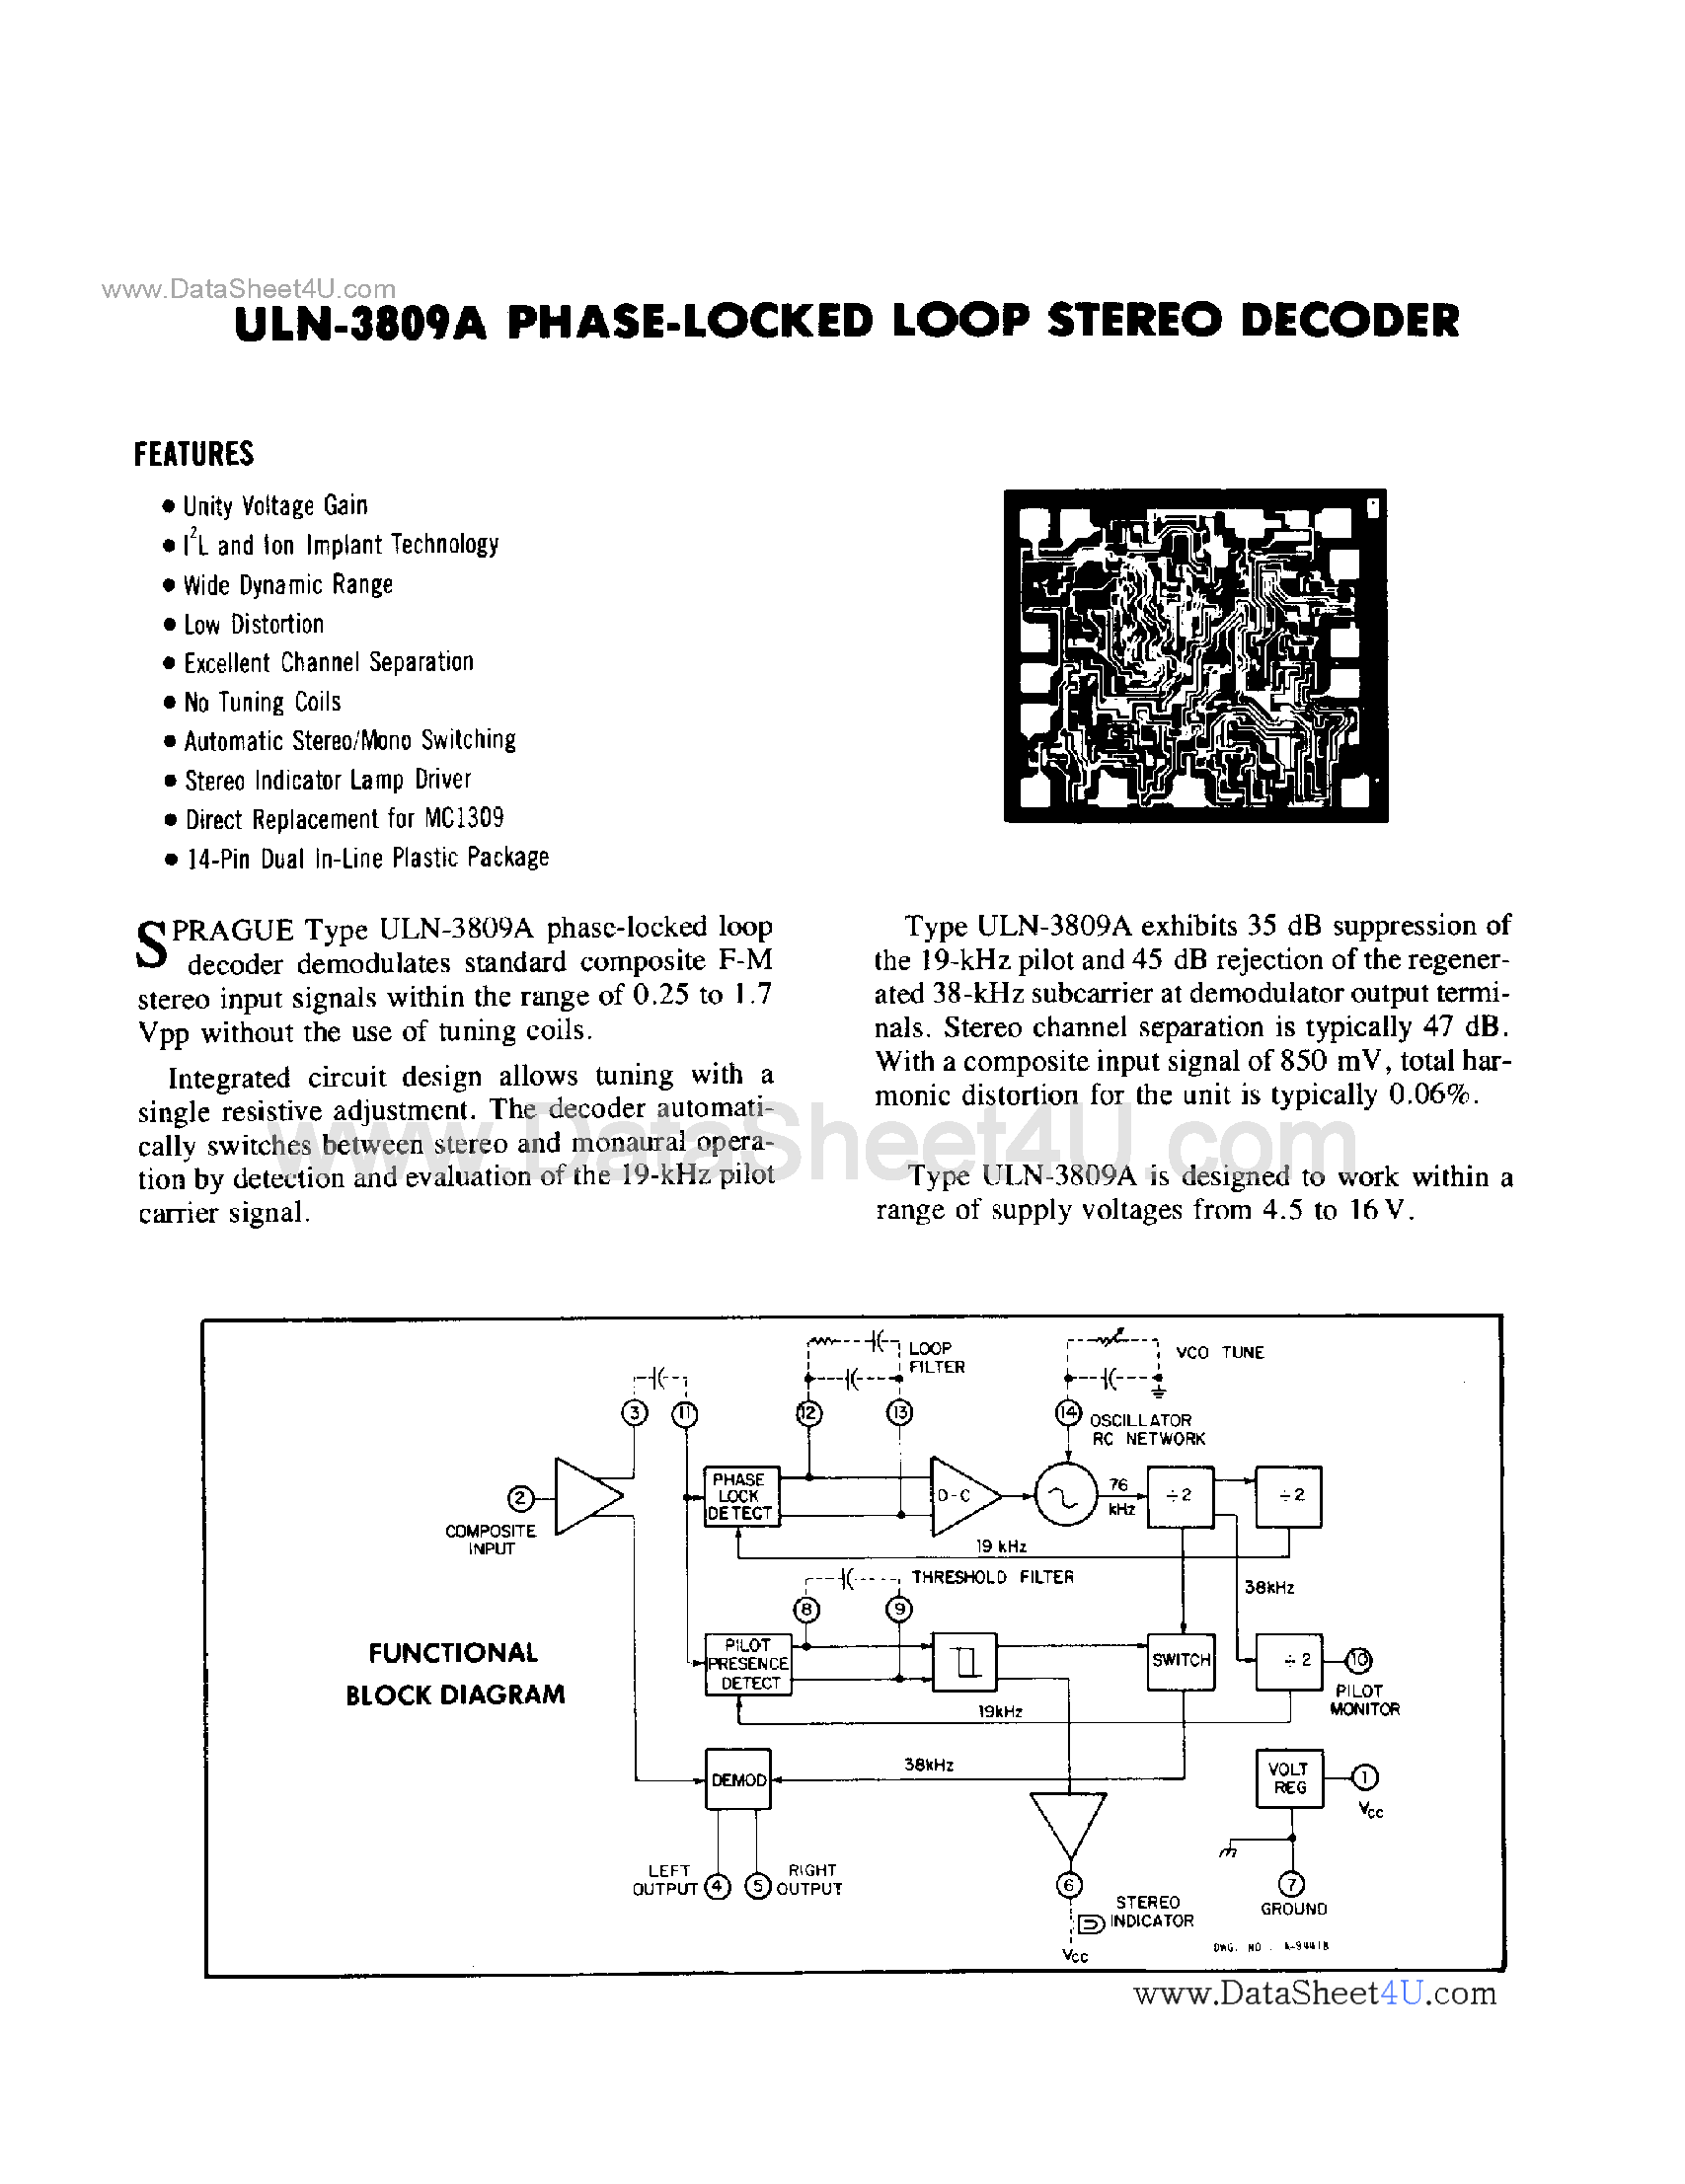 Datasheet ULN-3809A - Phase Locked Loop Stereo Decoder page 1